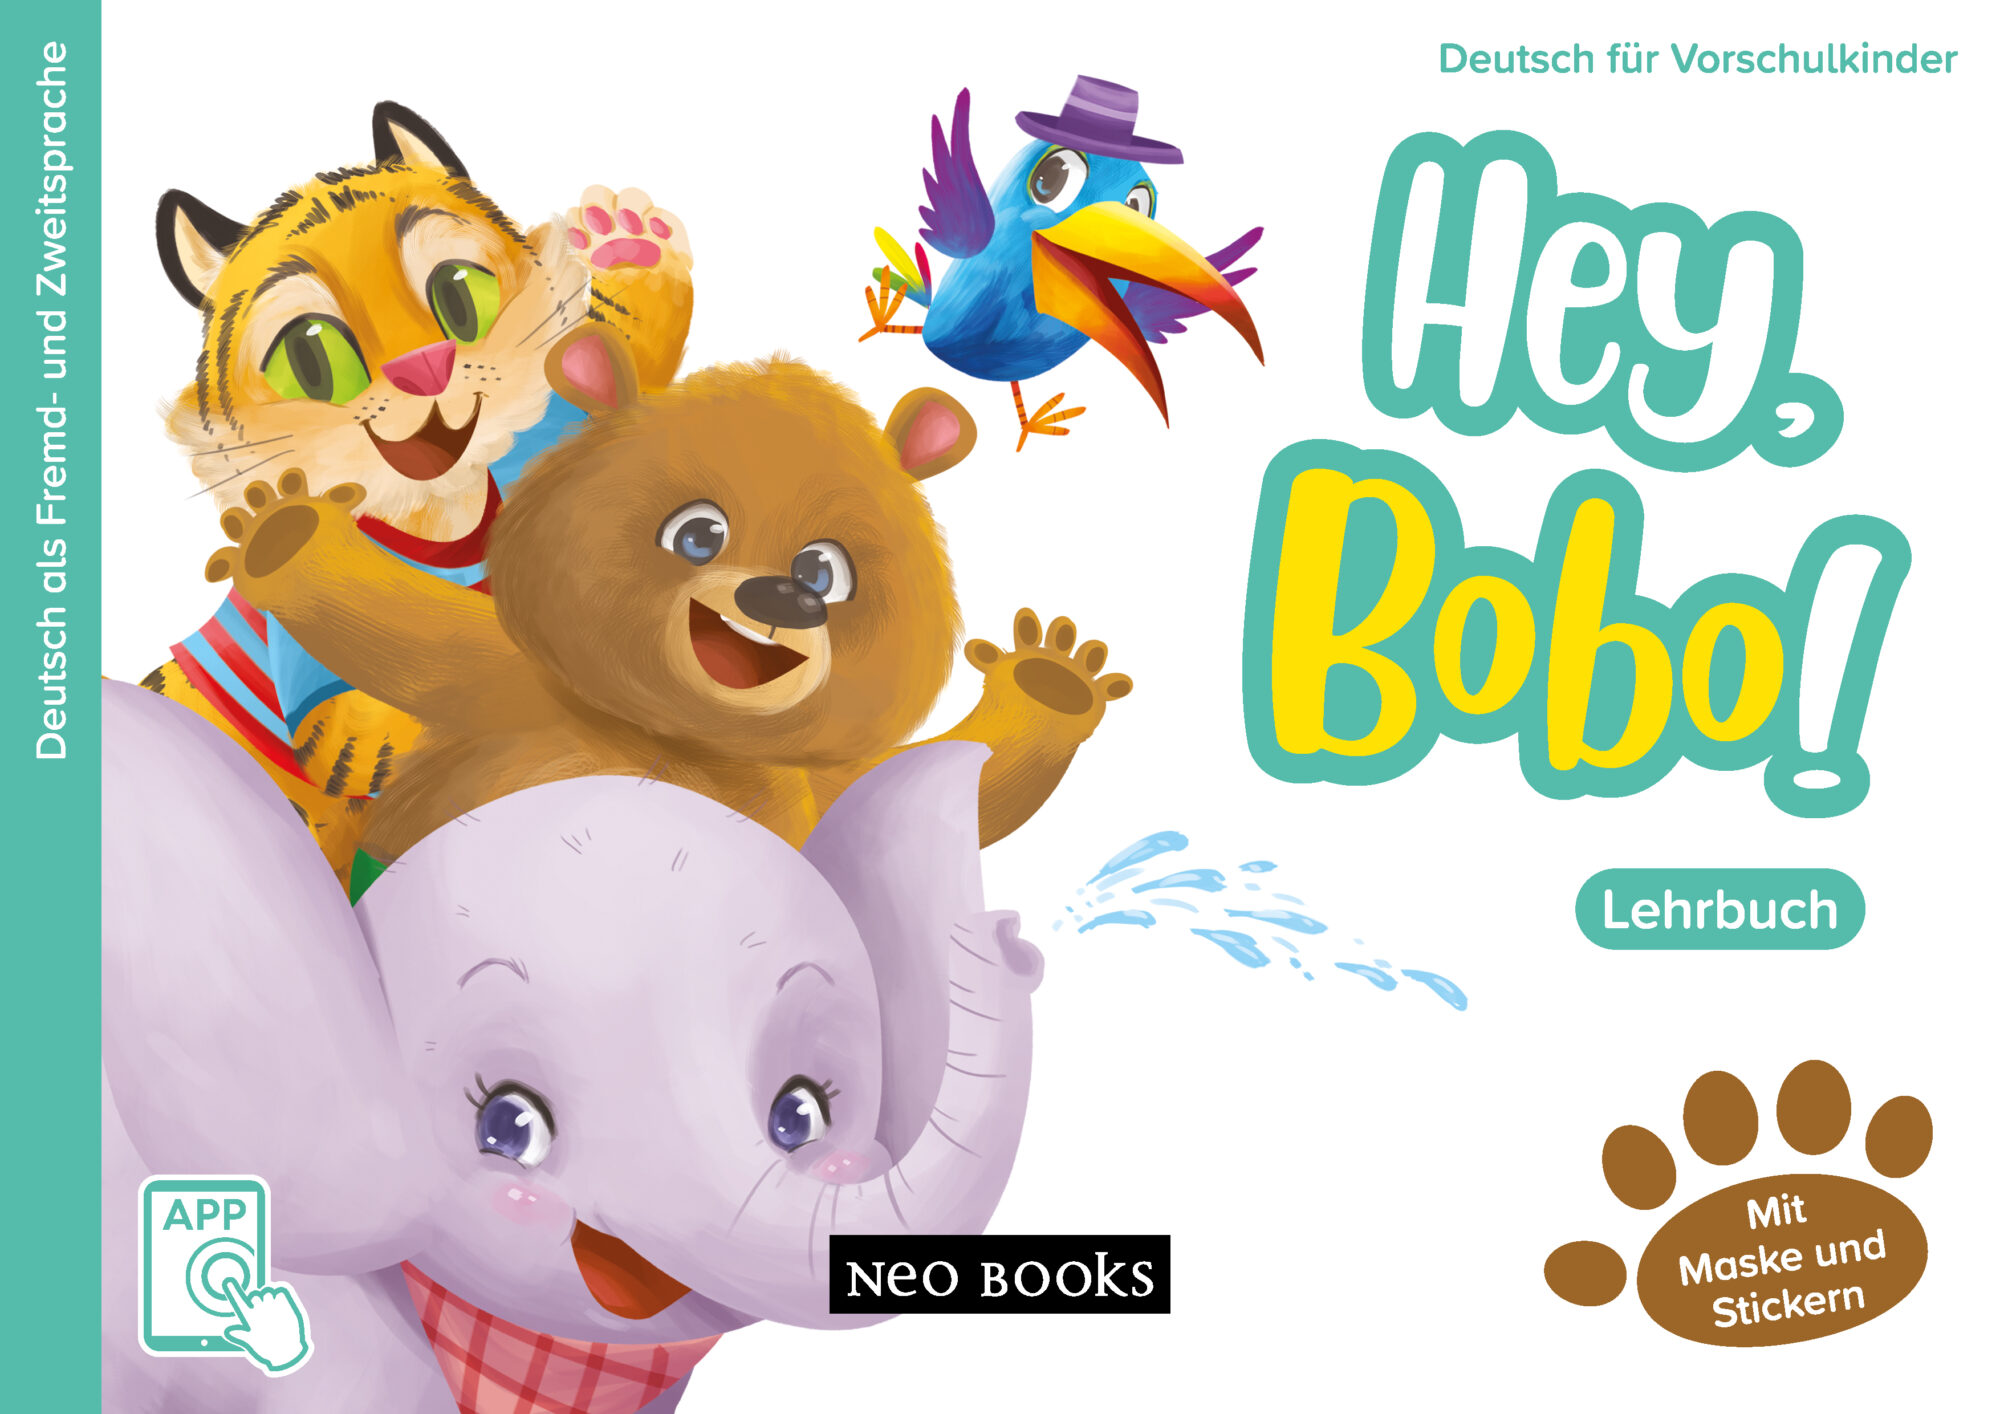 Hey, Bobo! - Lehrbuch